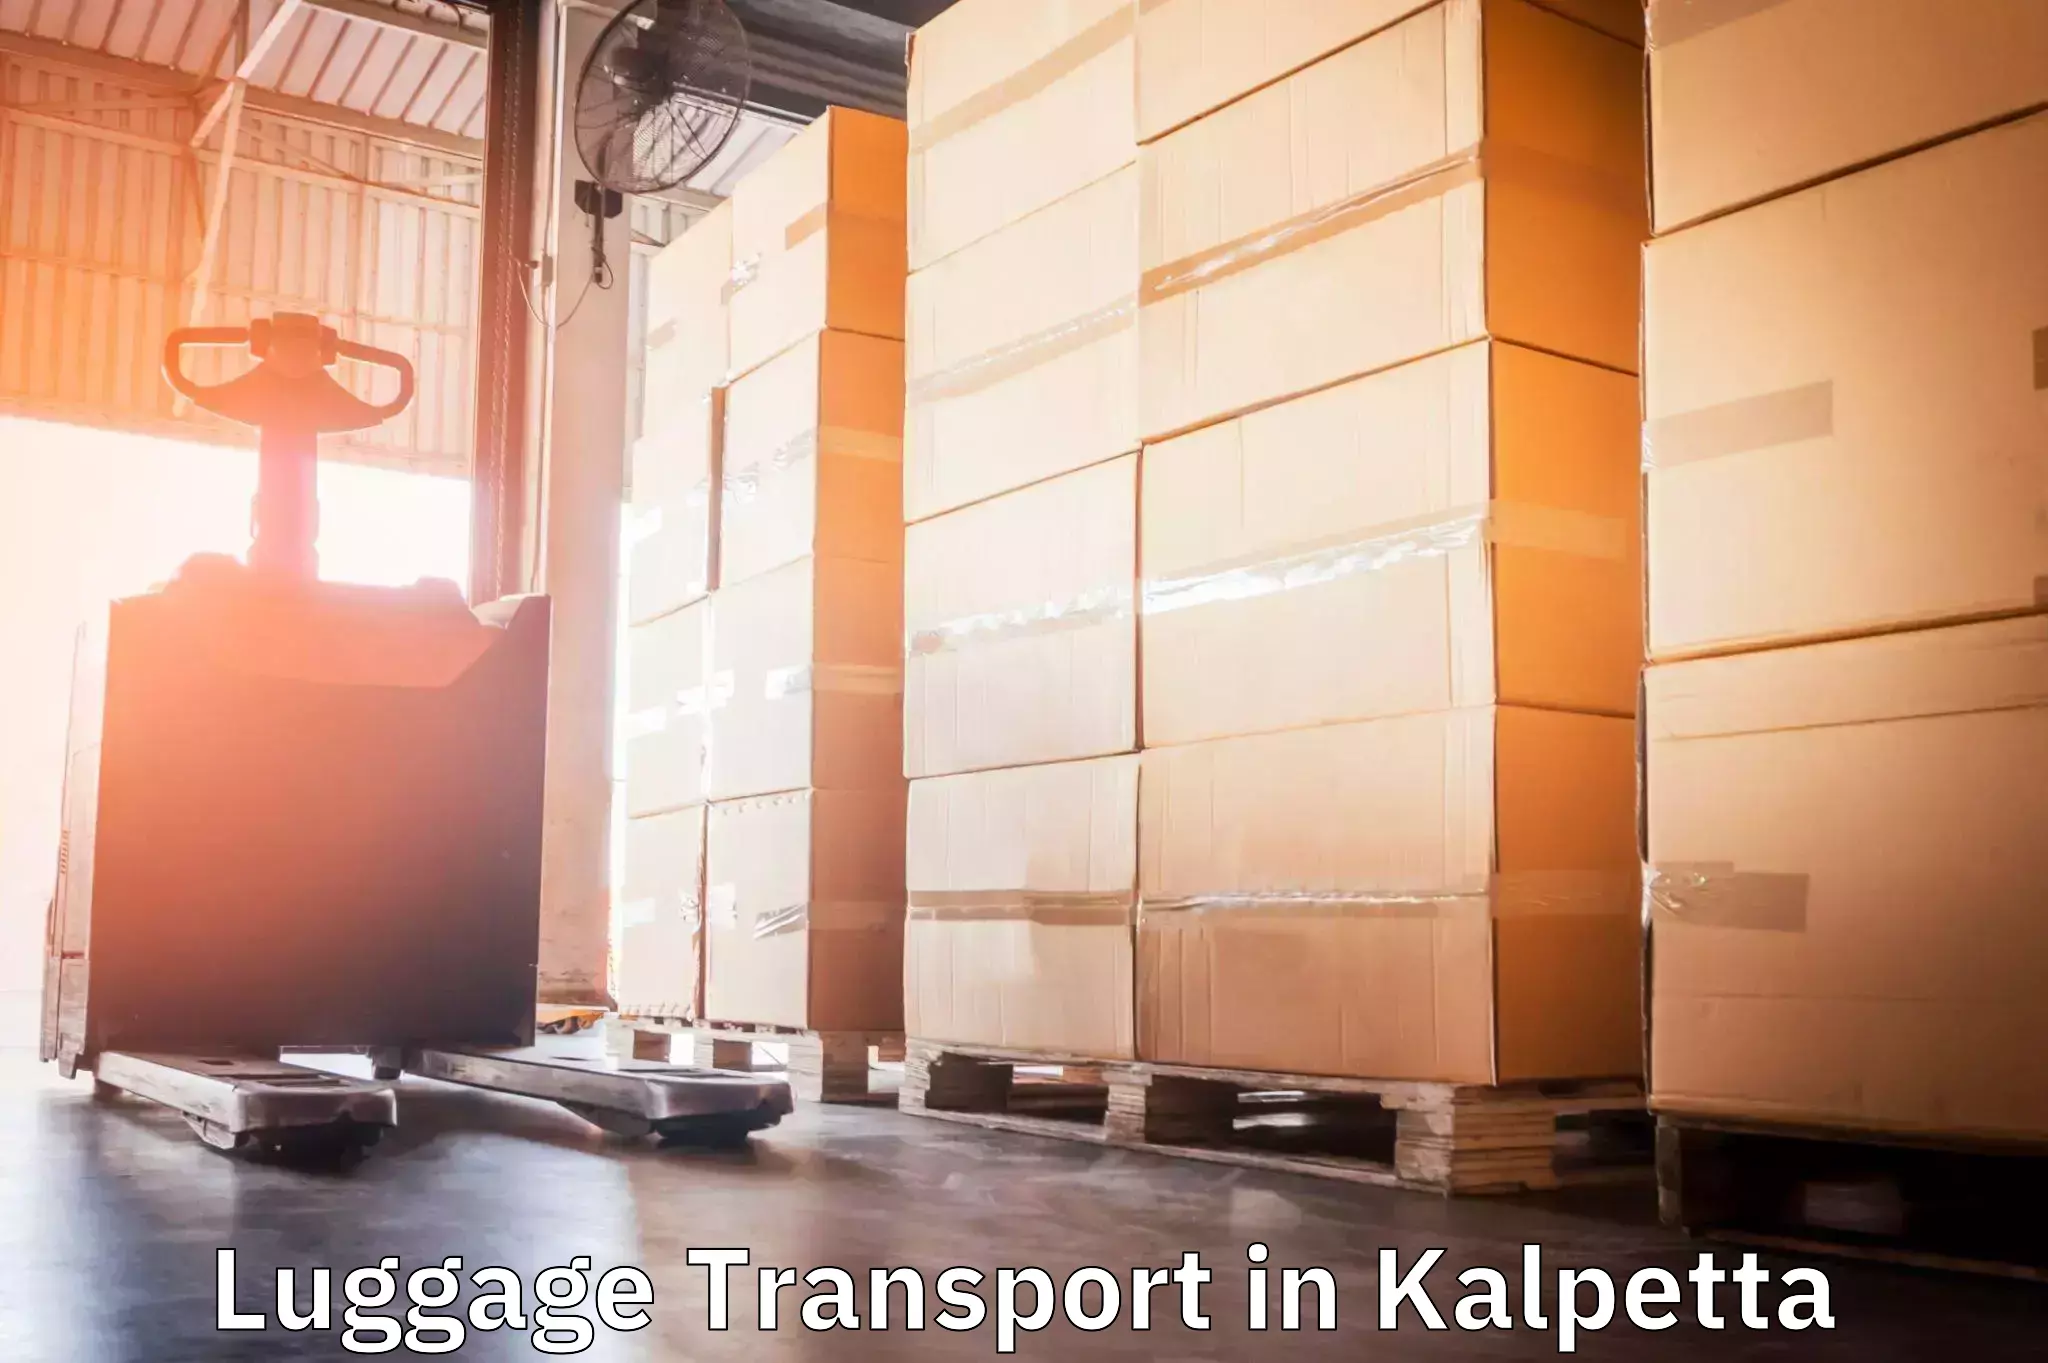 Luggage transport pricing in Kalpetta